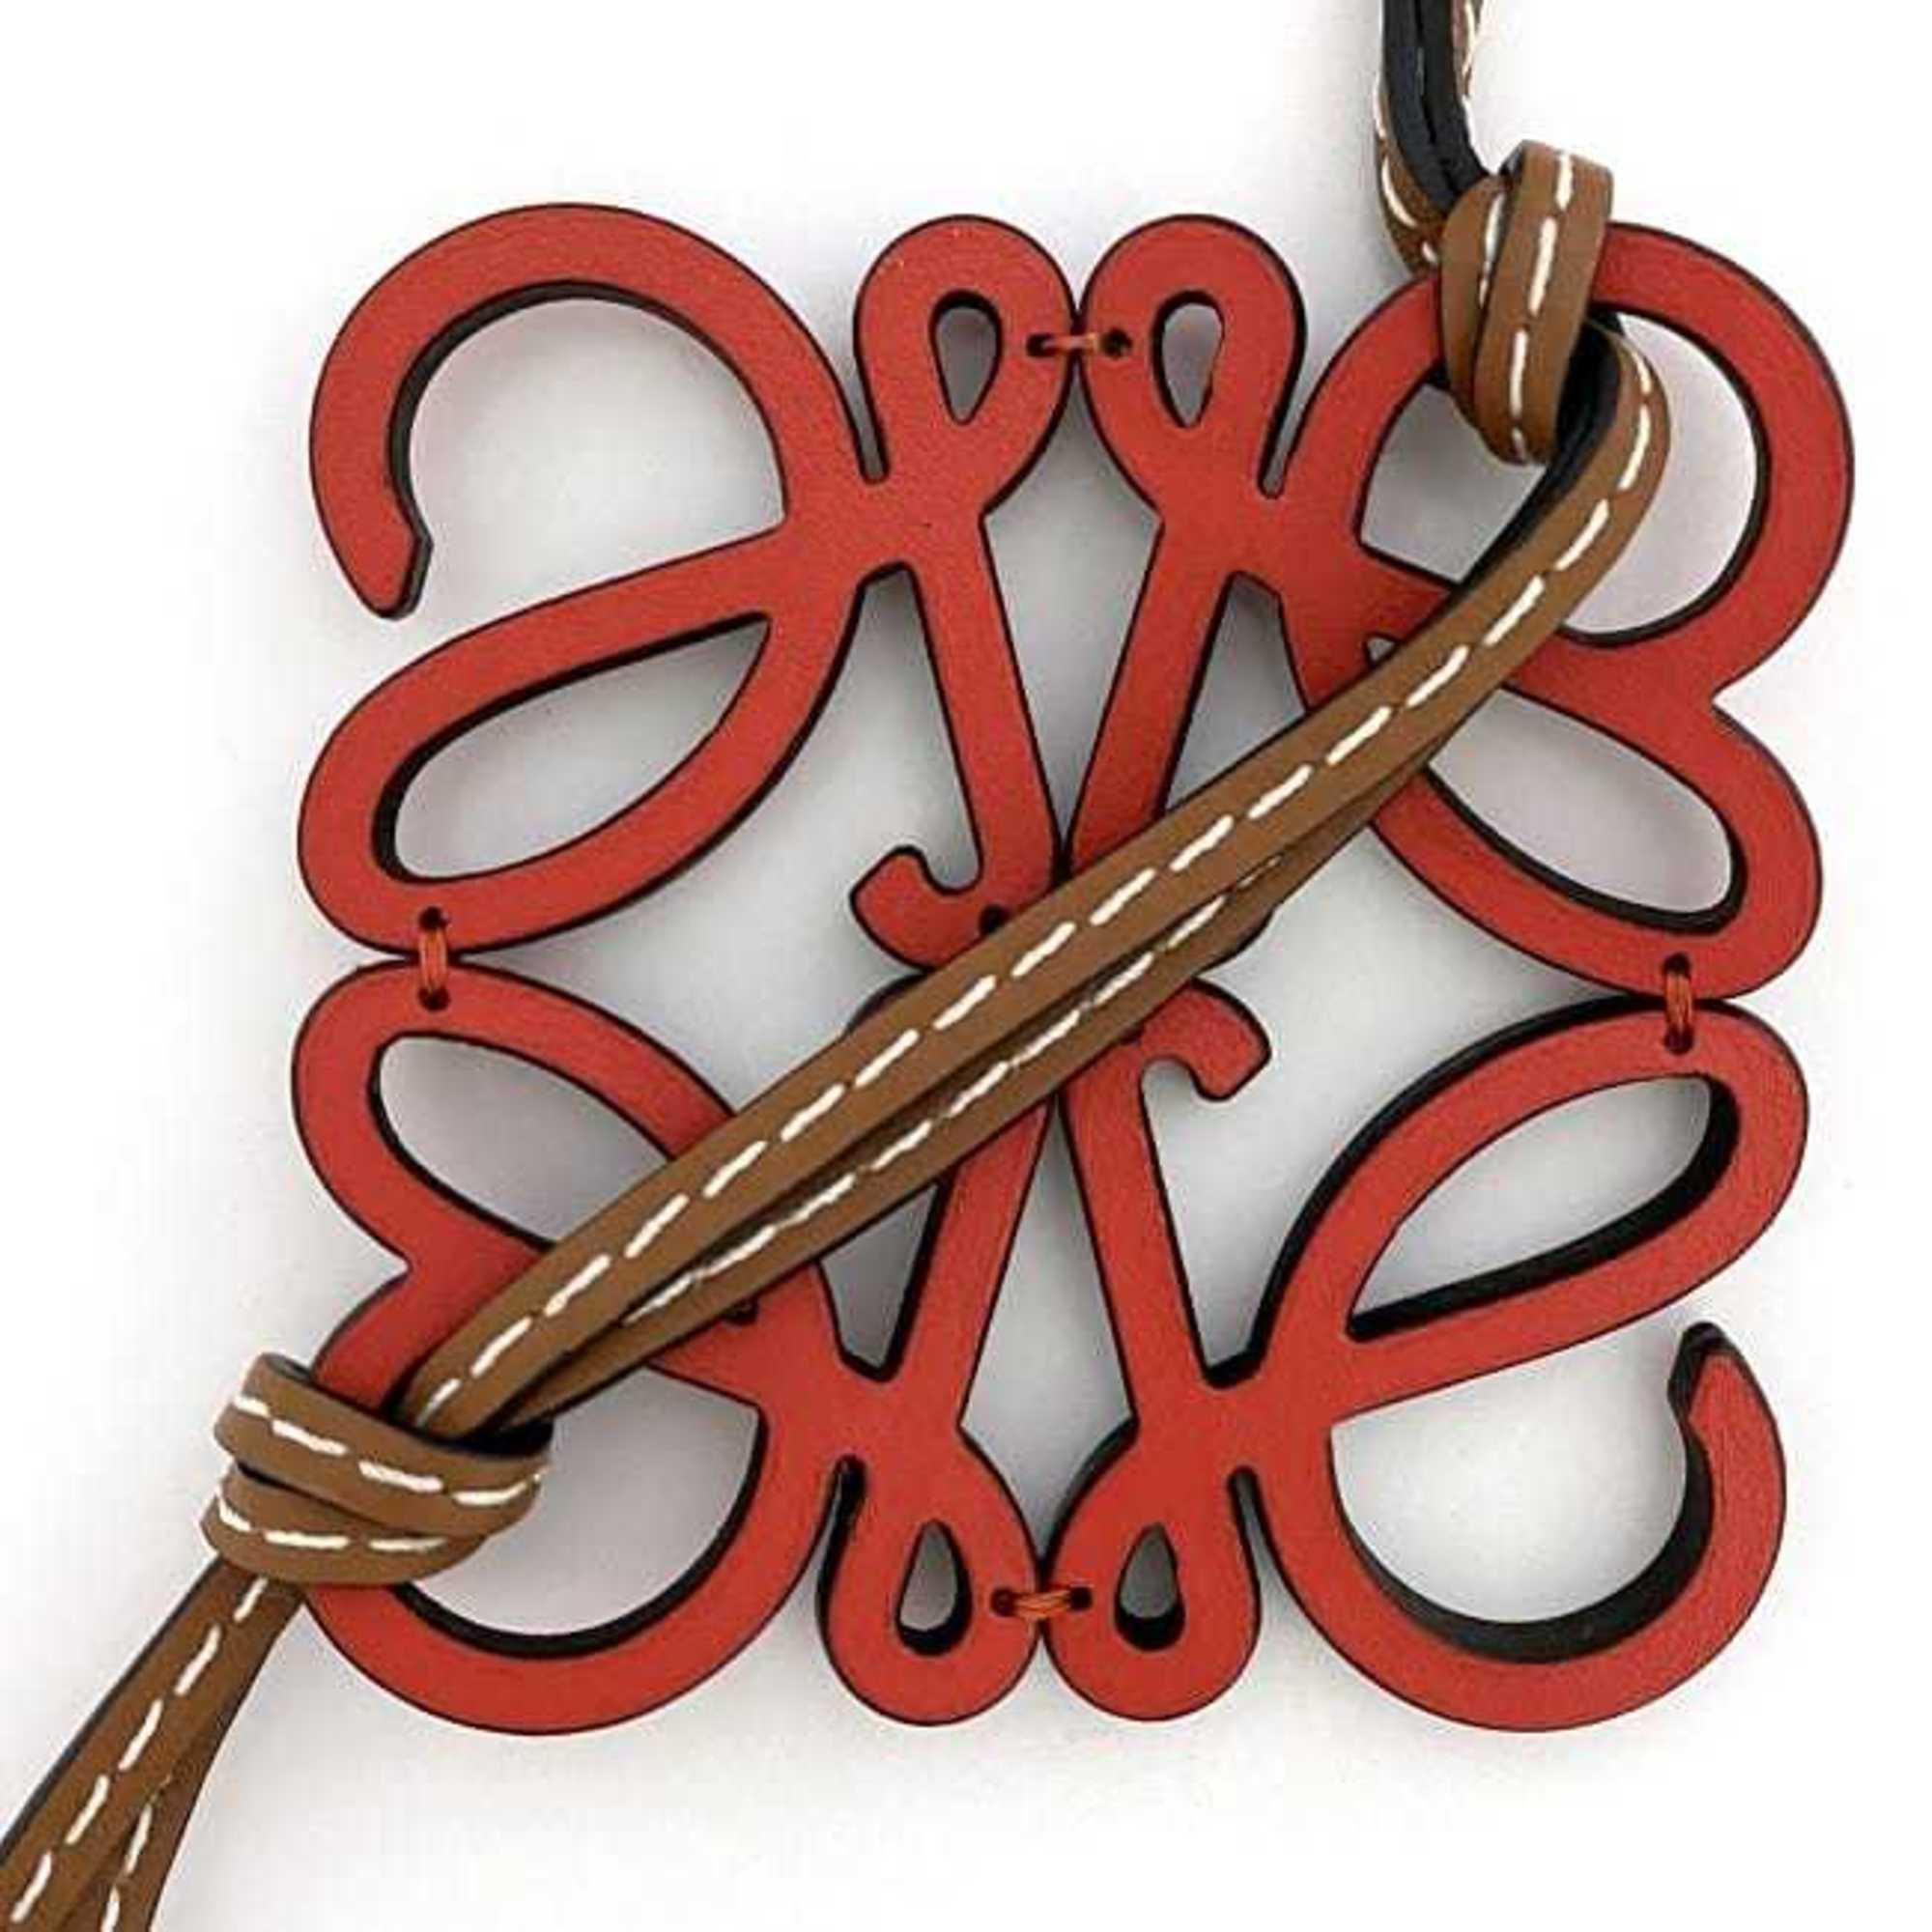 LOEWE Charm Red Brown Anagram f-20203 Leather Metal Bag Keychain Women's